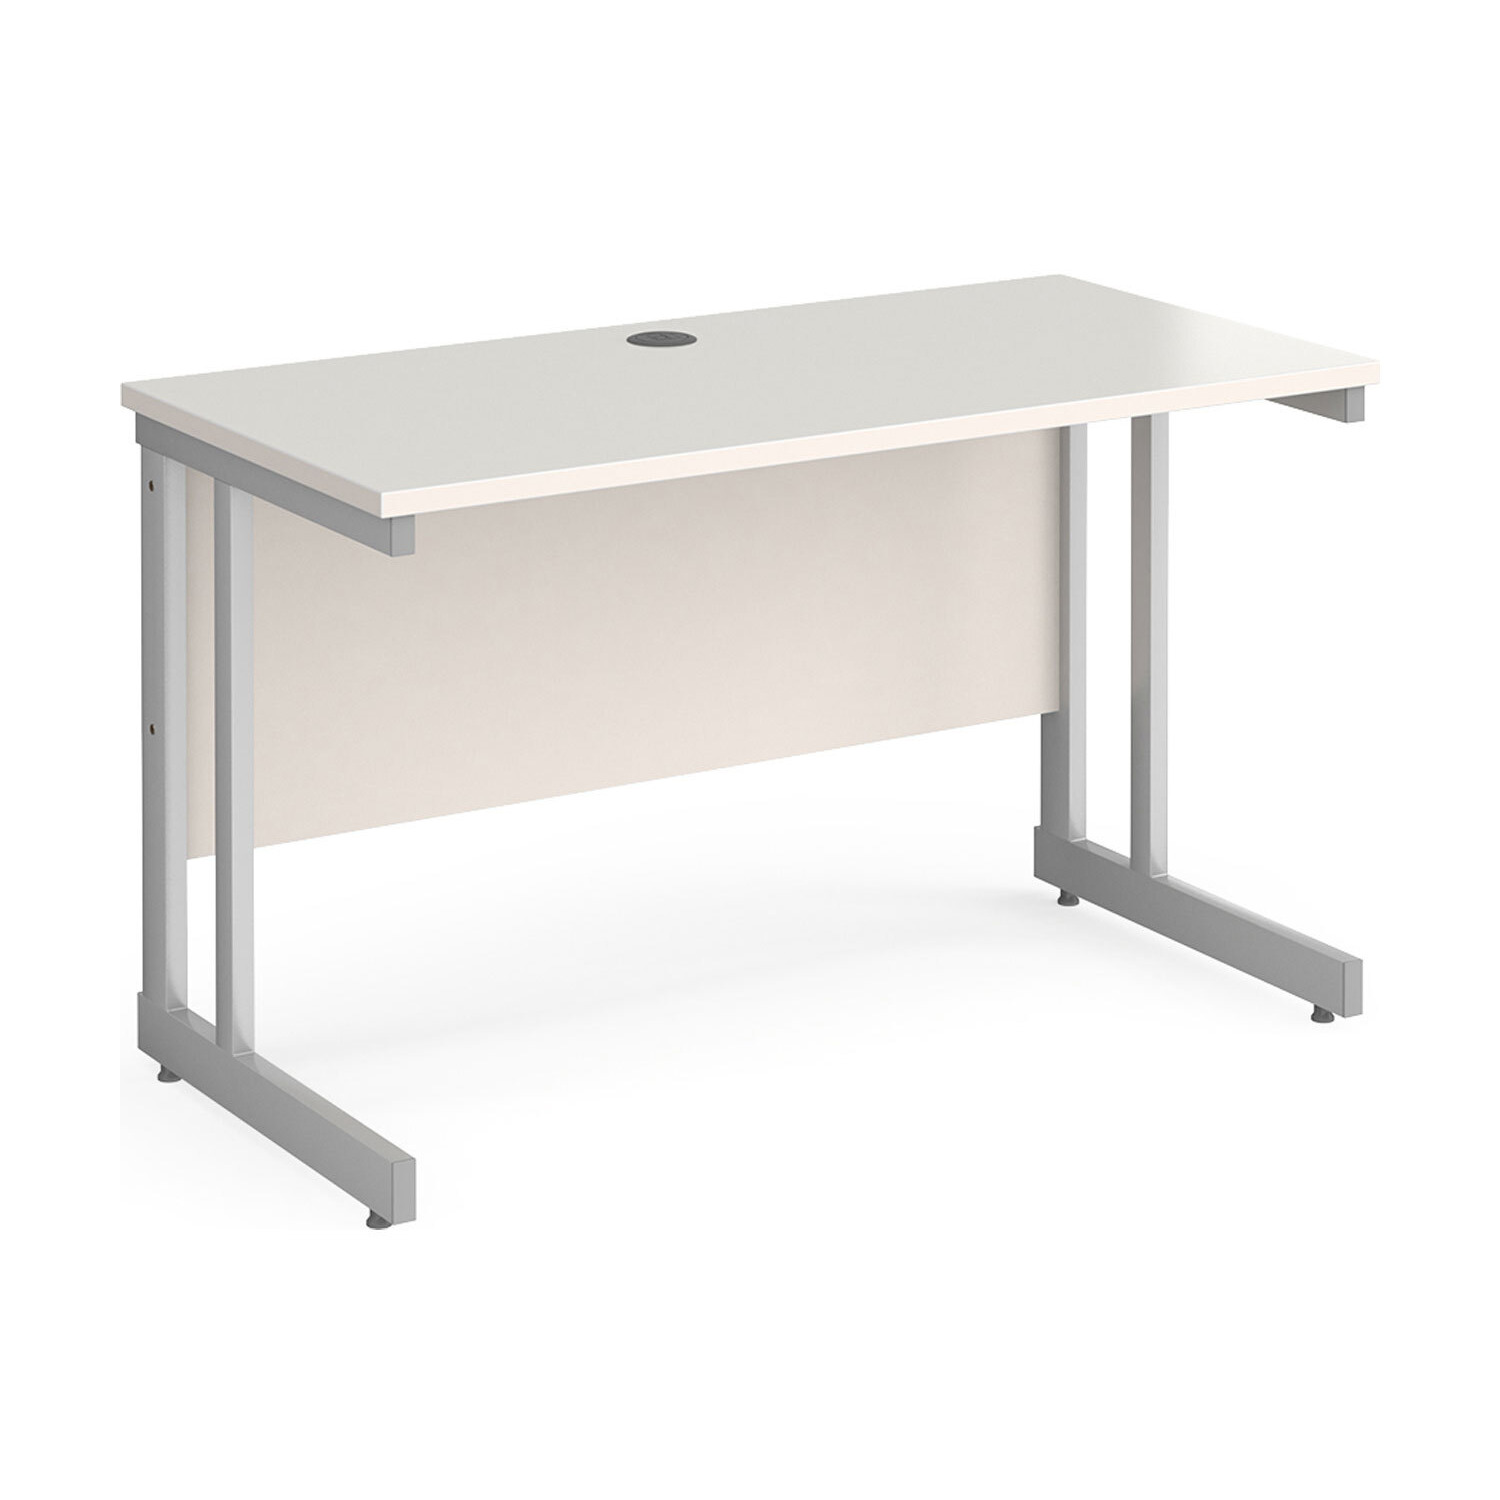 Tully II Narrow Rectangular Desk, 120wx60dx73h (cm), White